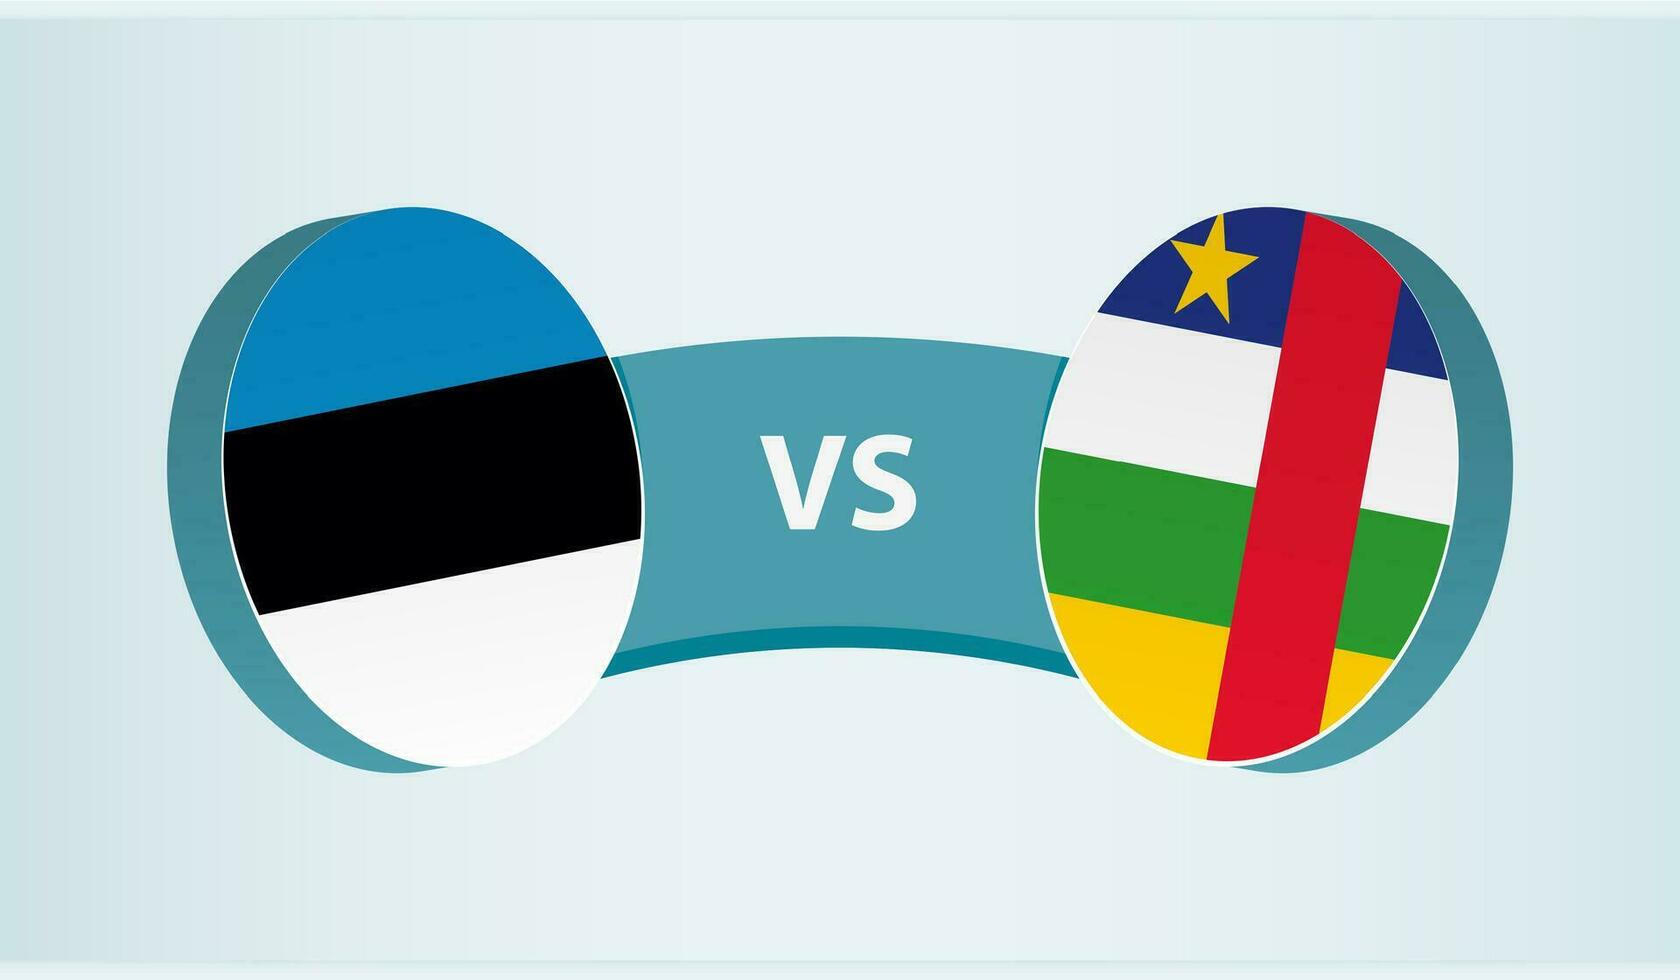 Estonia versus Central African Republic, team sports competition concept. vector